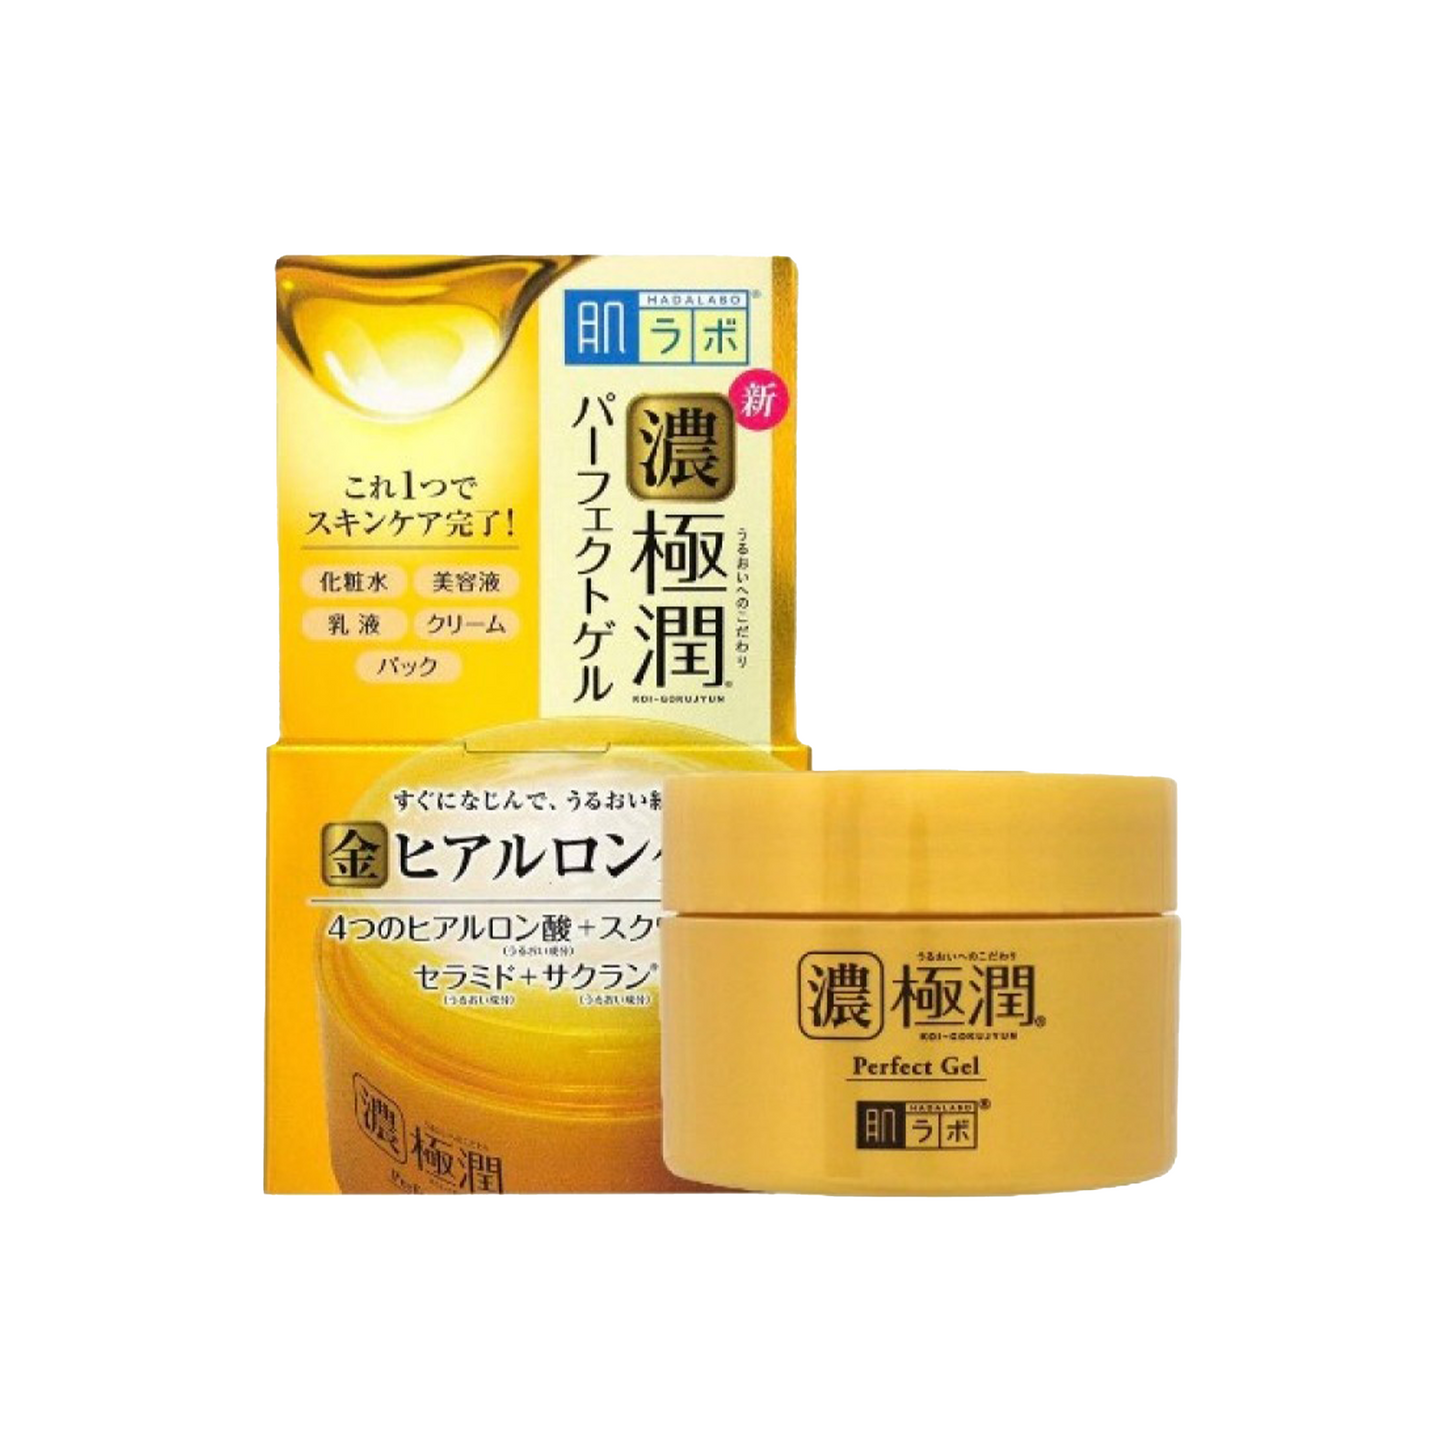 HADA LABO - Gokujyun Premium Super Moisture Cream